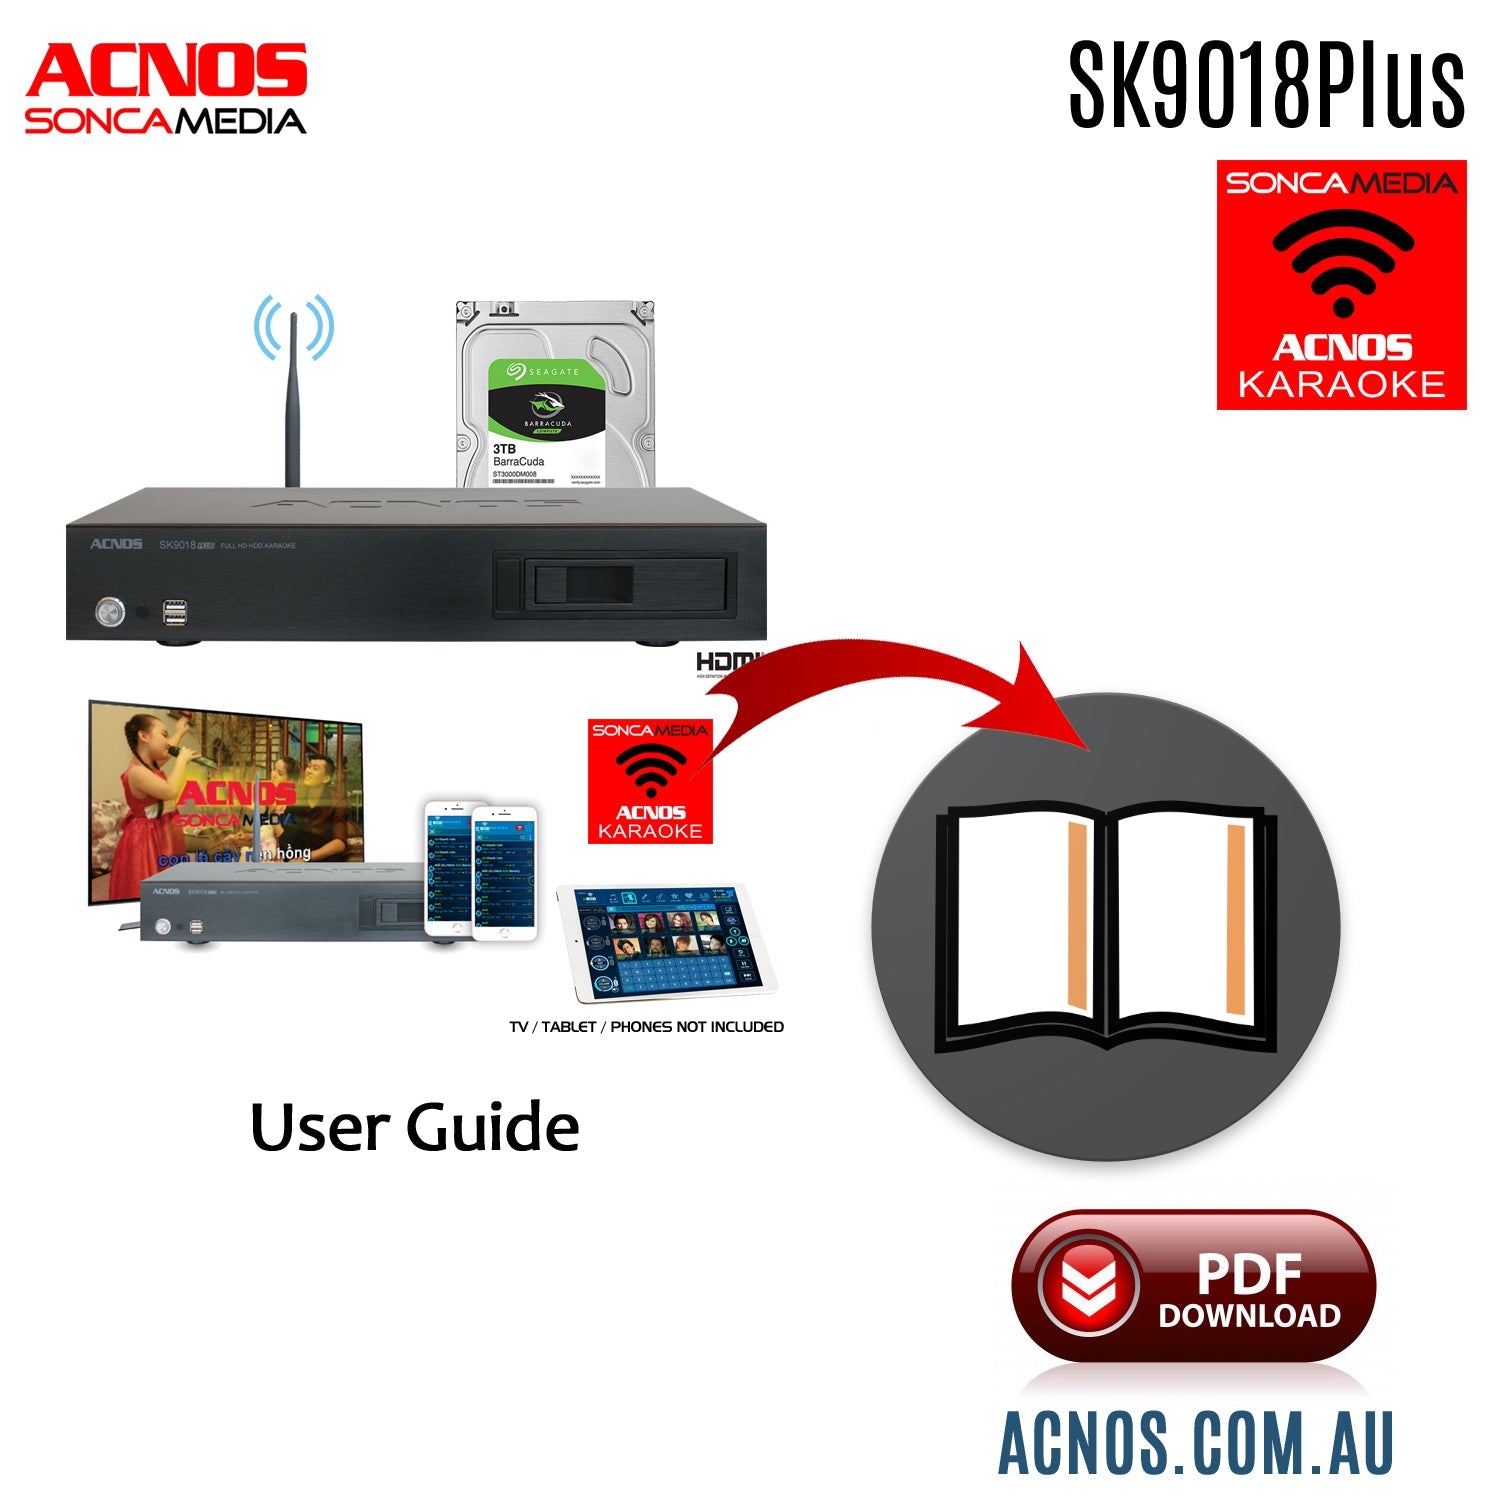 How To Connect Guide - ACNOS SK9018+ Vietnamese Karaoke Hard Drive System - Karaoke Home Entertainment